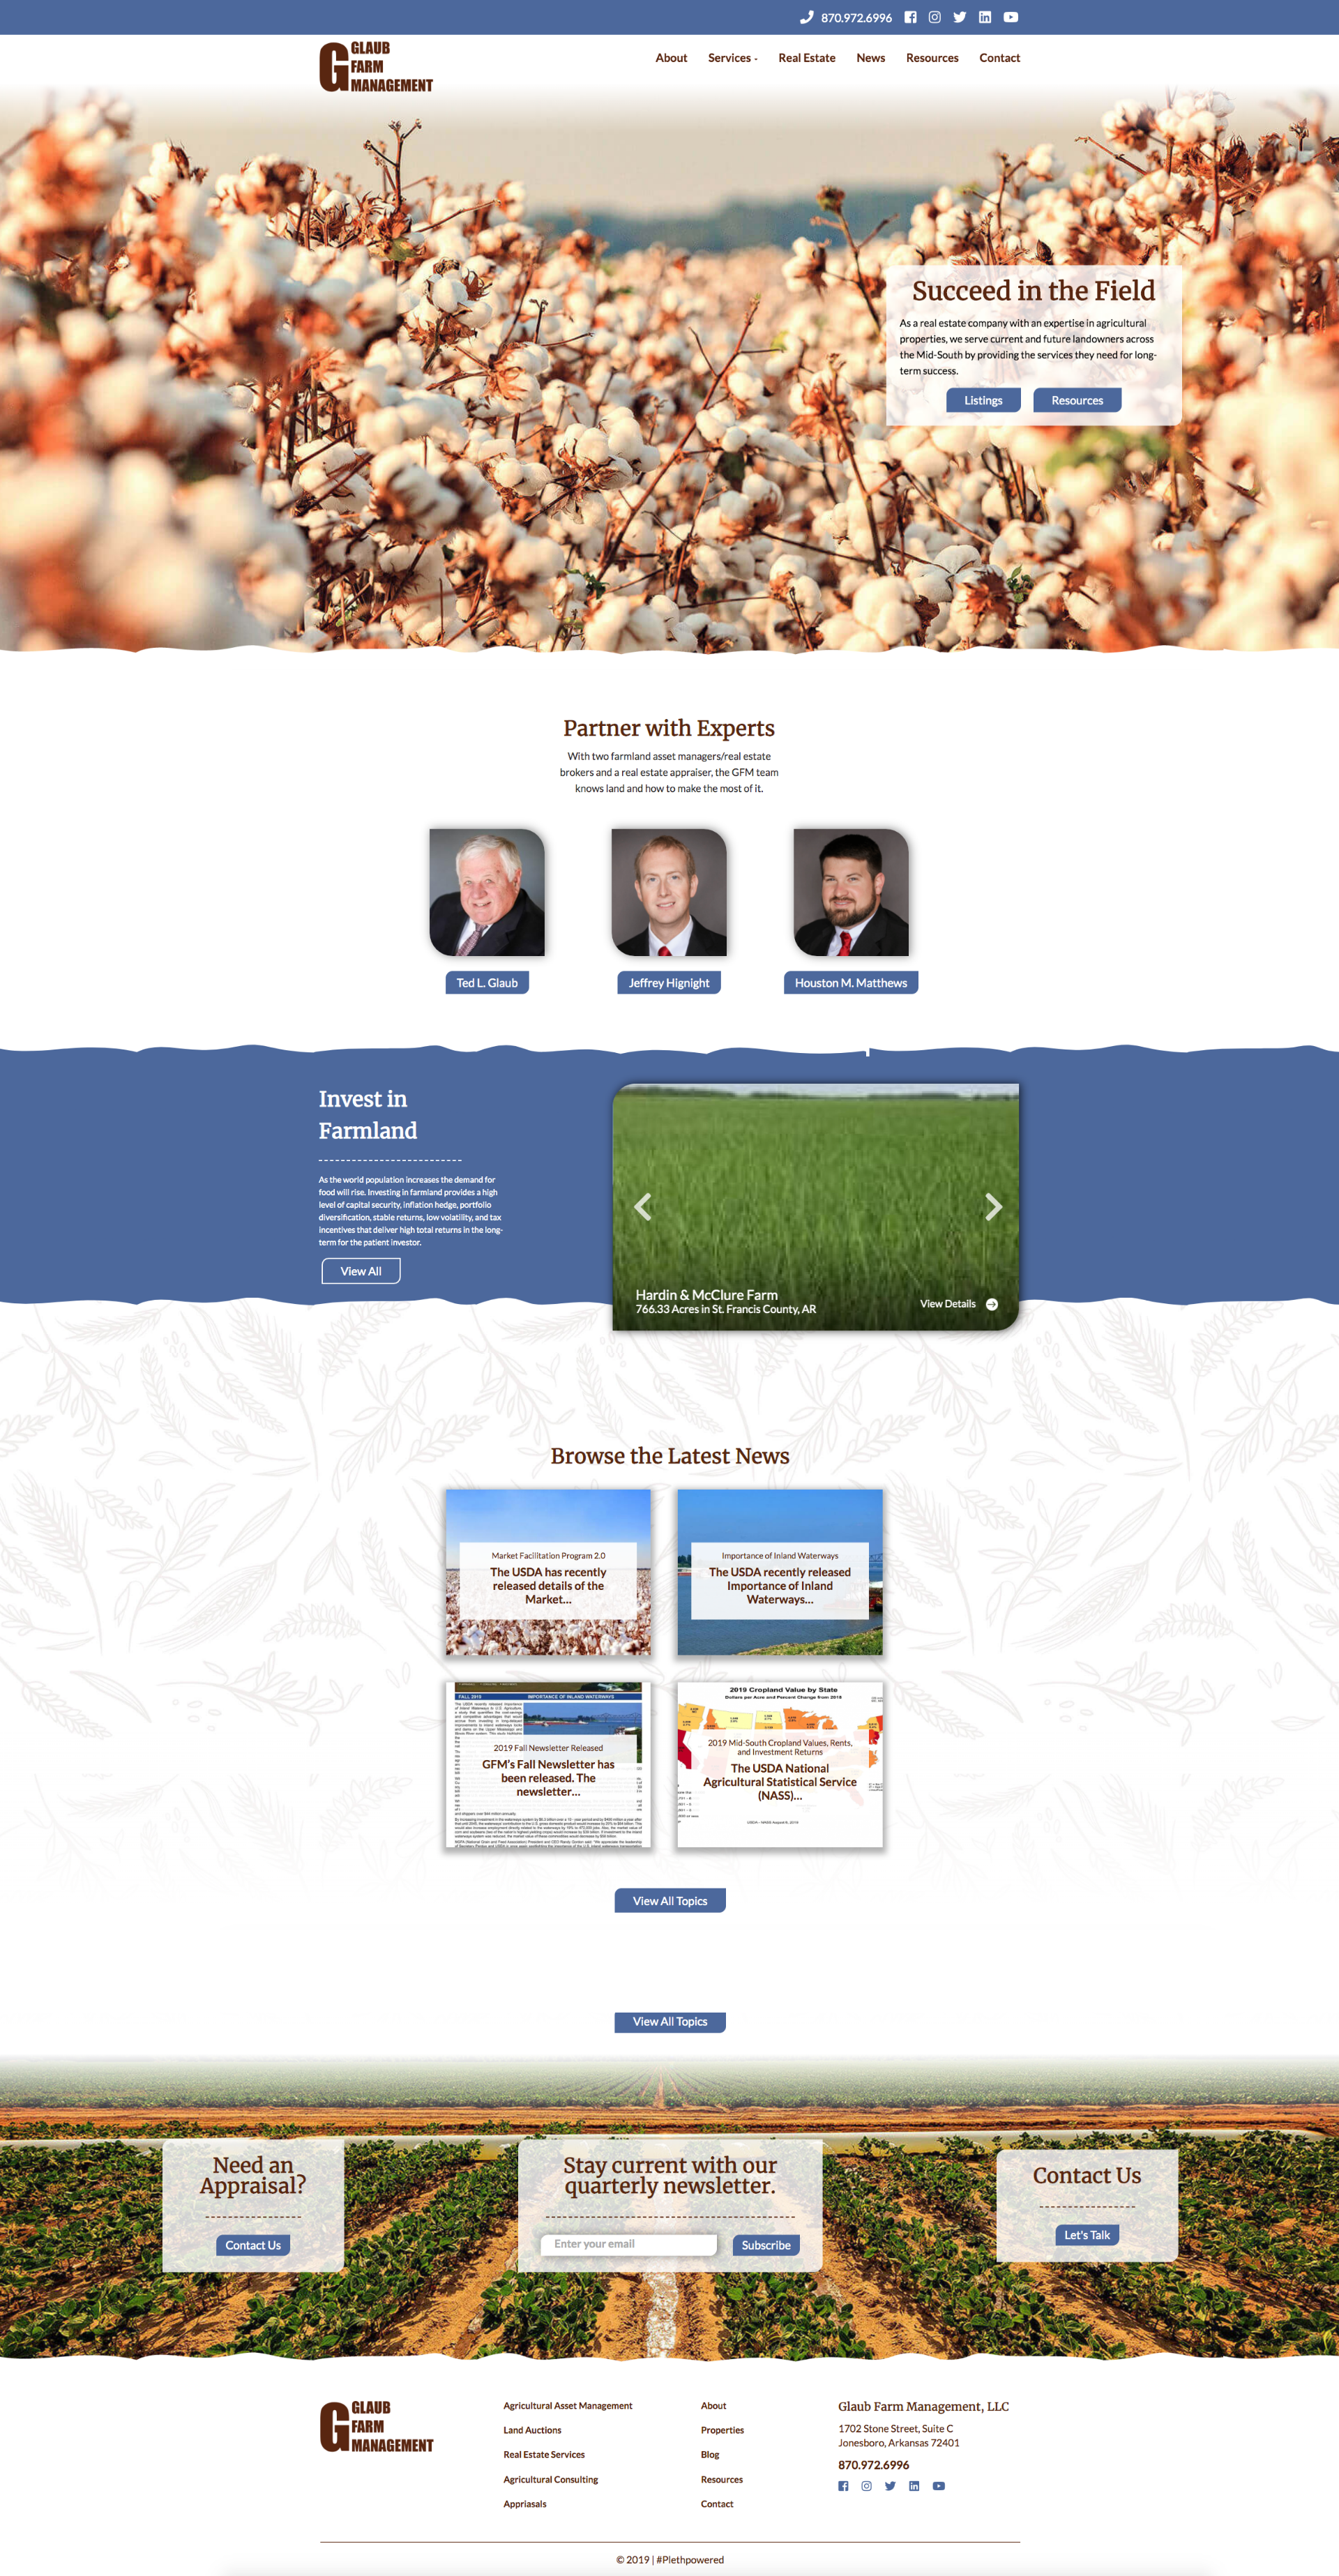 Glaub Farm Management full homepage layout